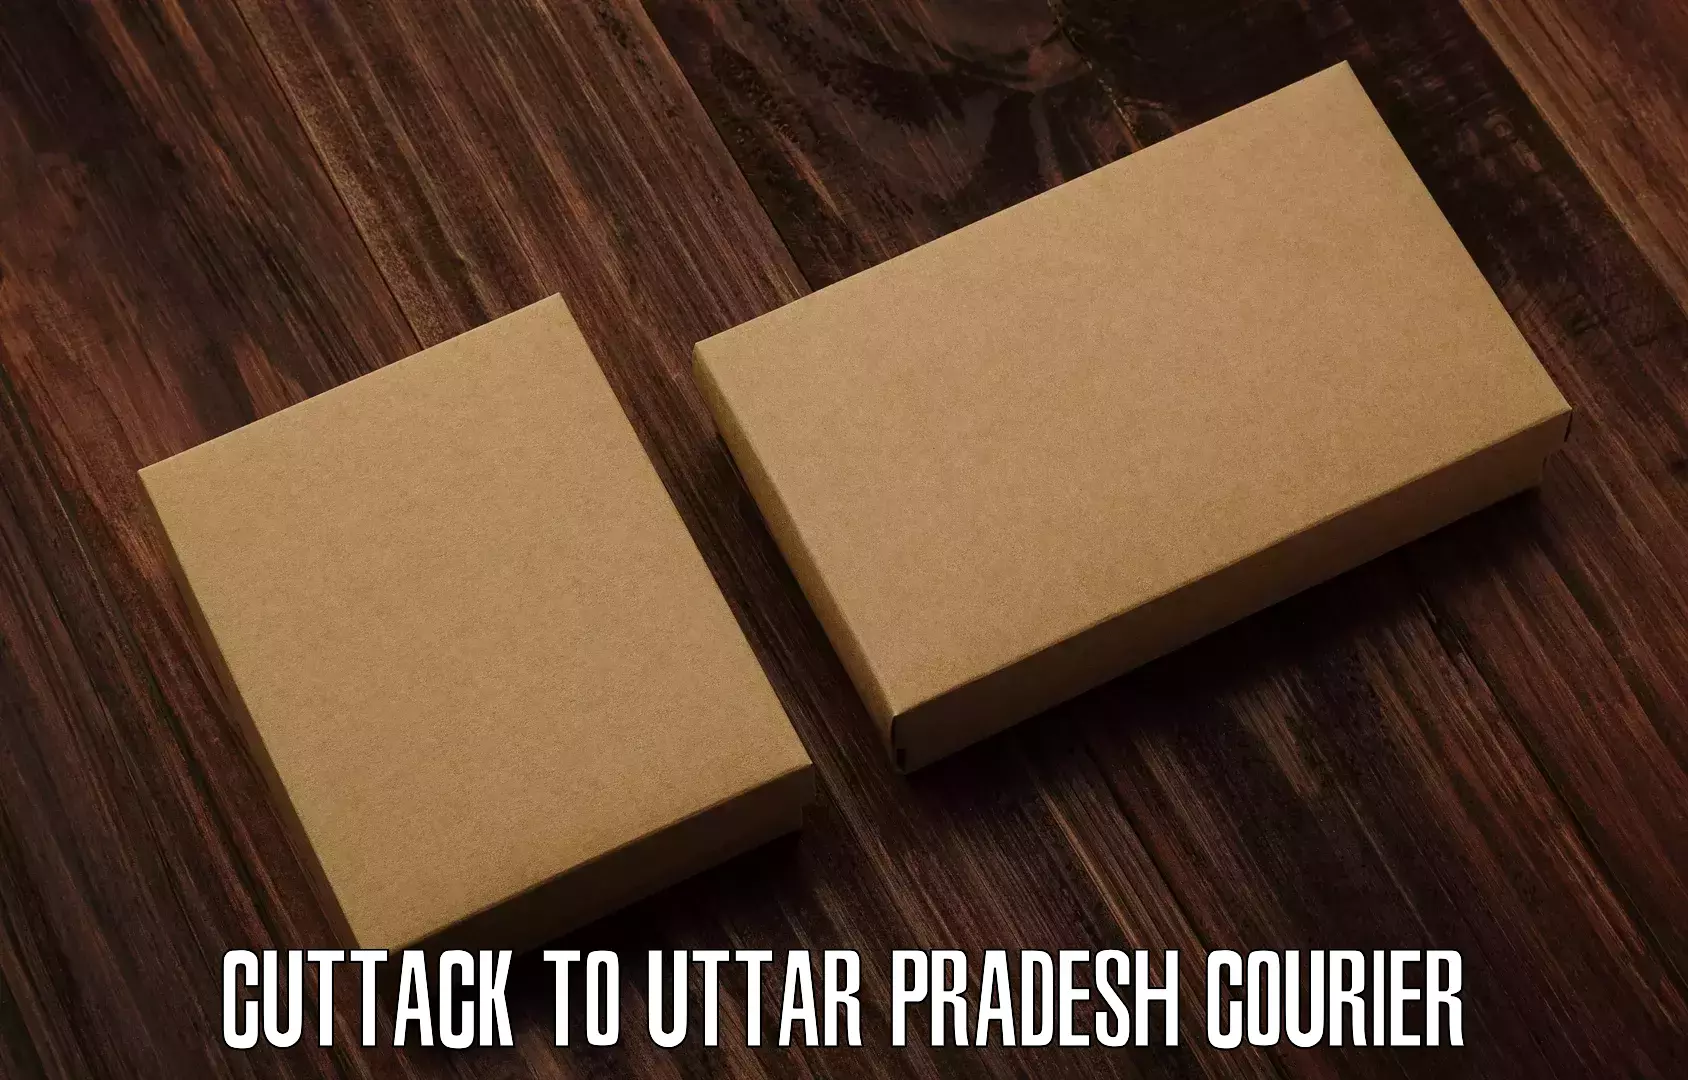 Courier service comparison Cuttack to Uttar Pradesh